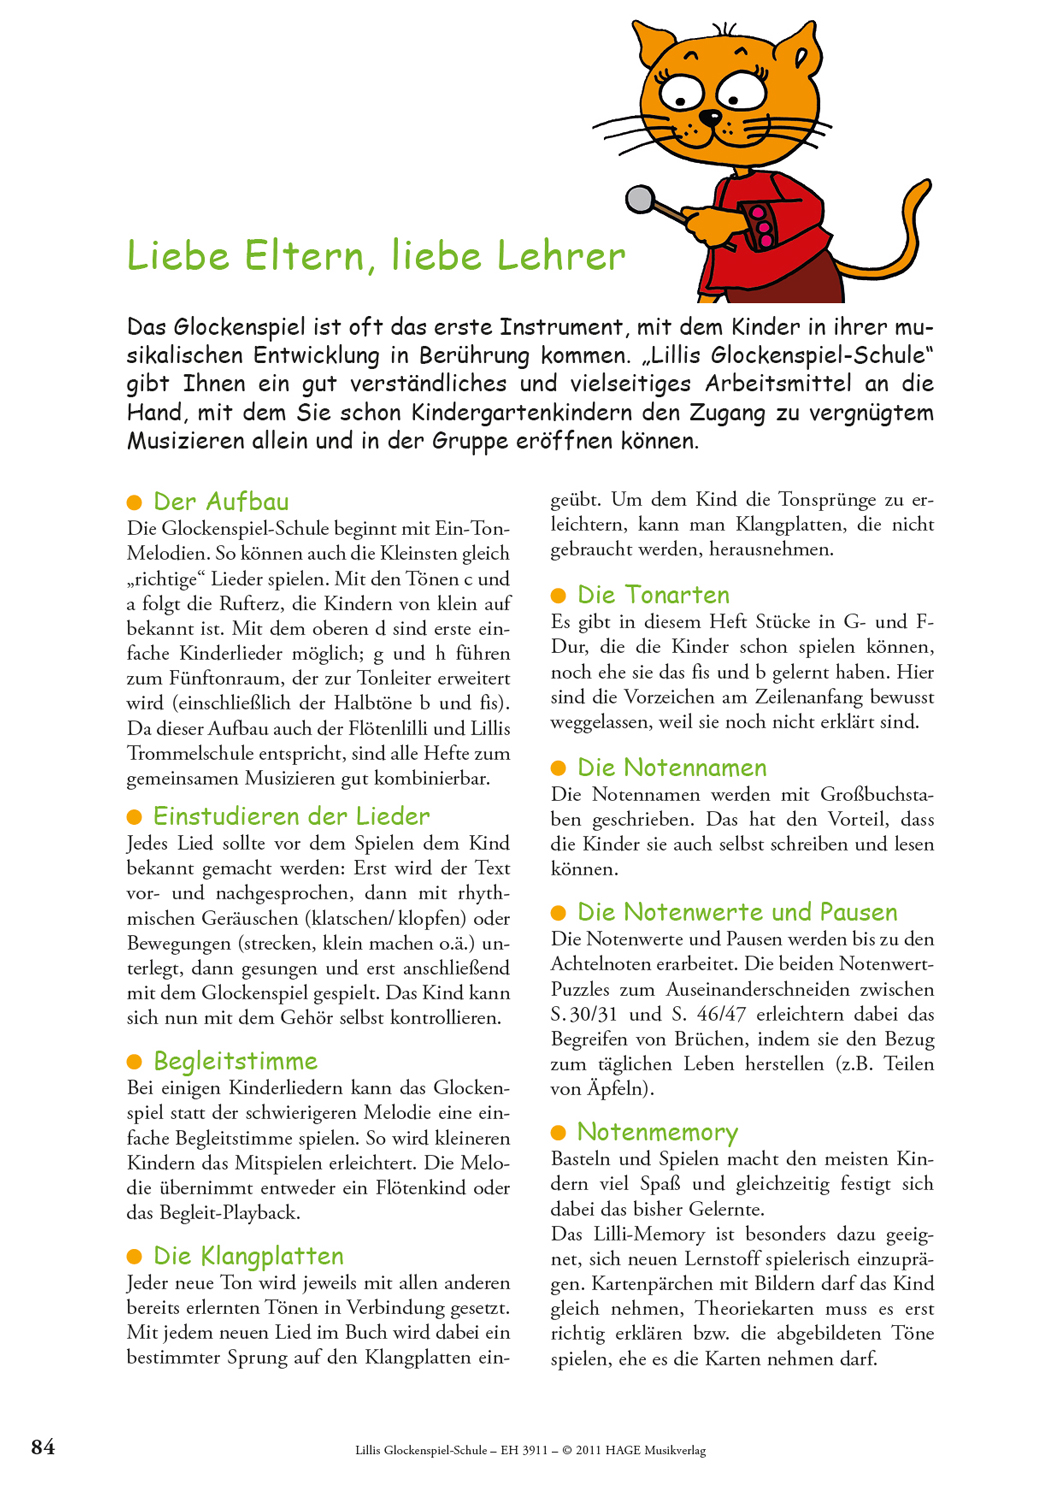 Lillis Glockenspiel School Pages 12